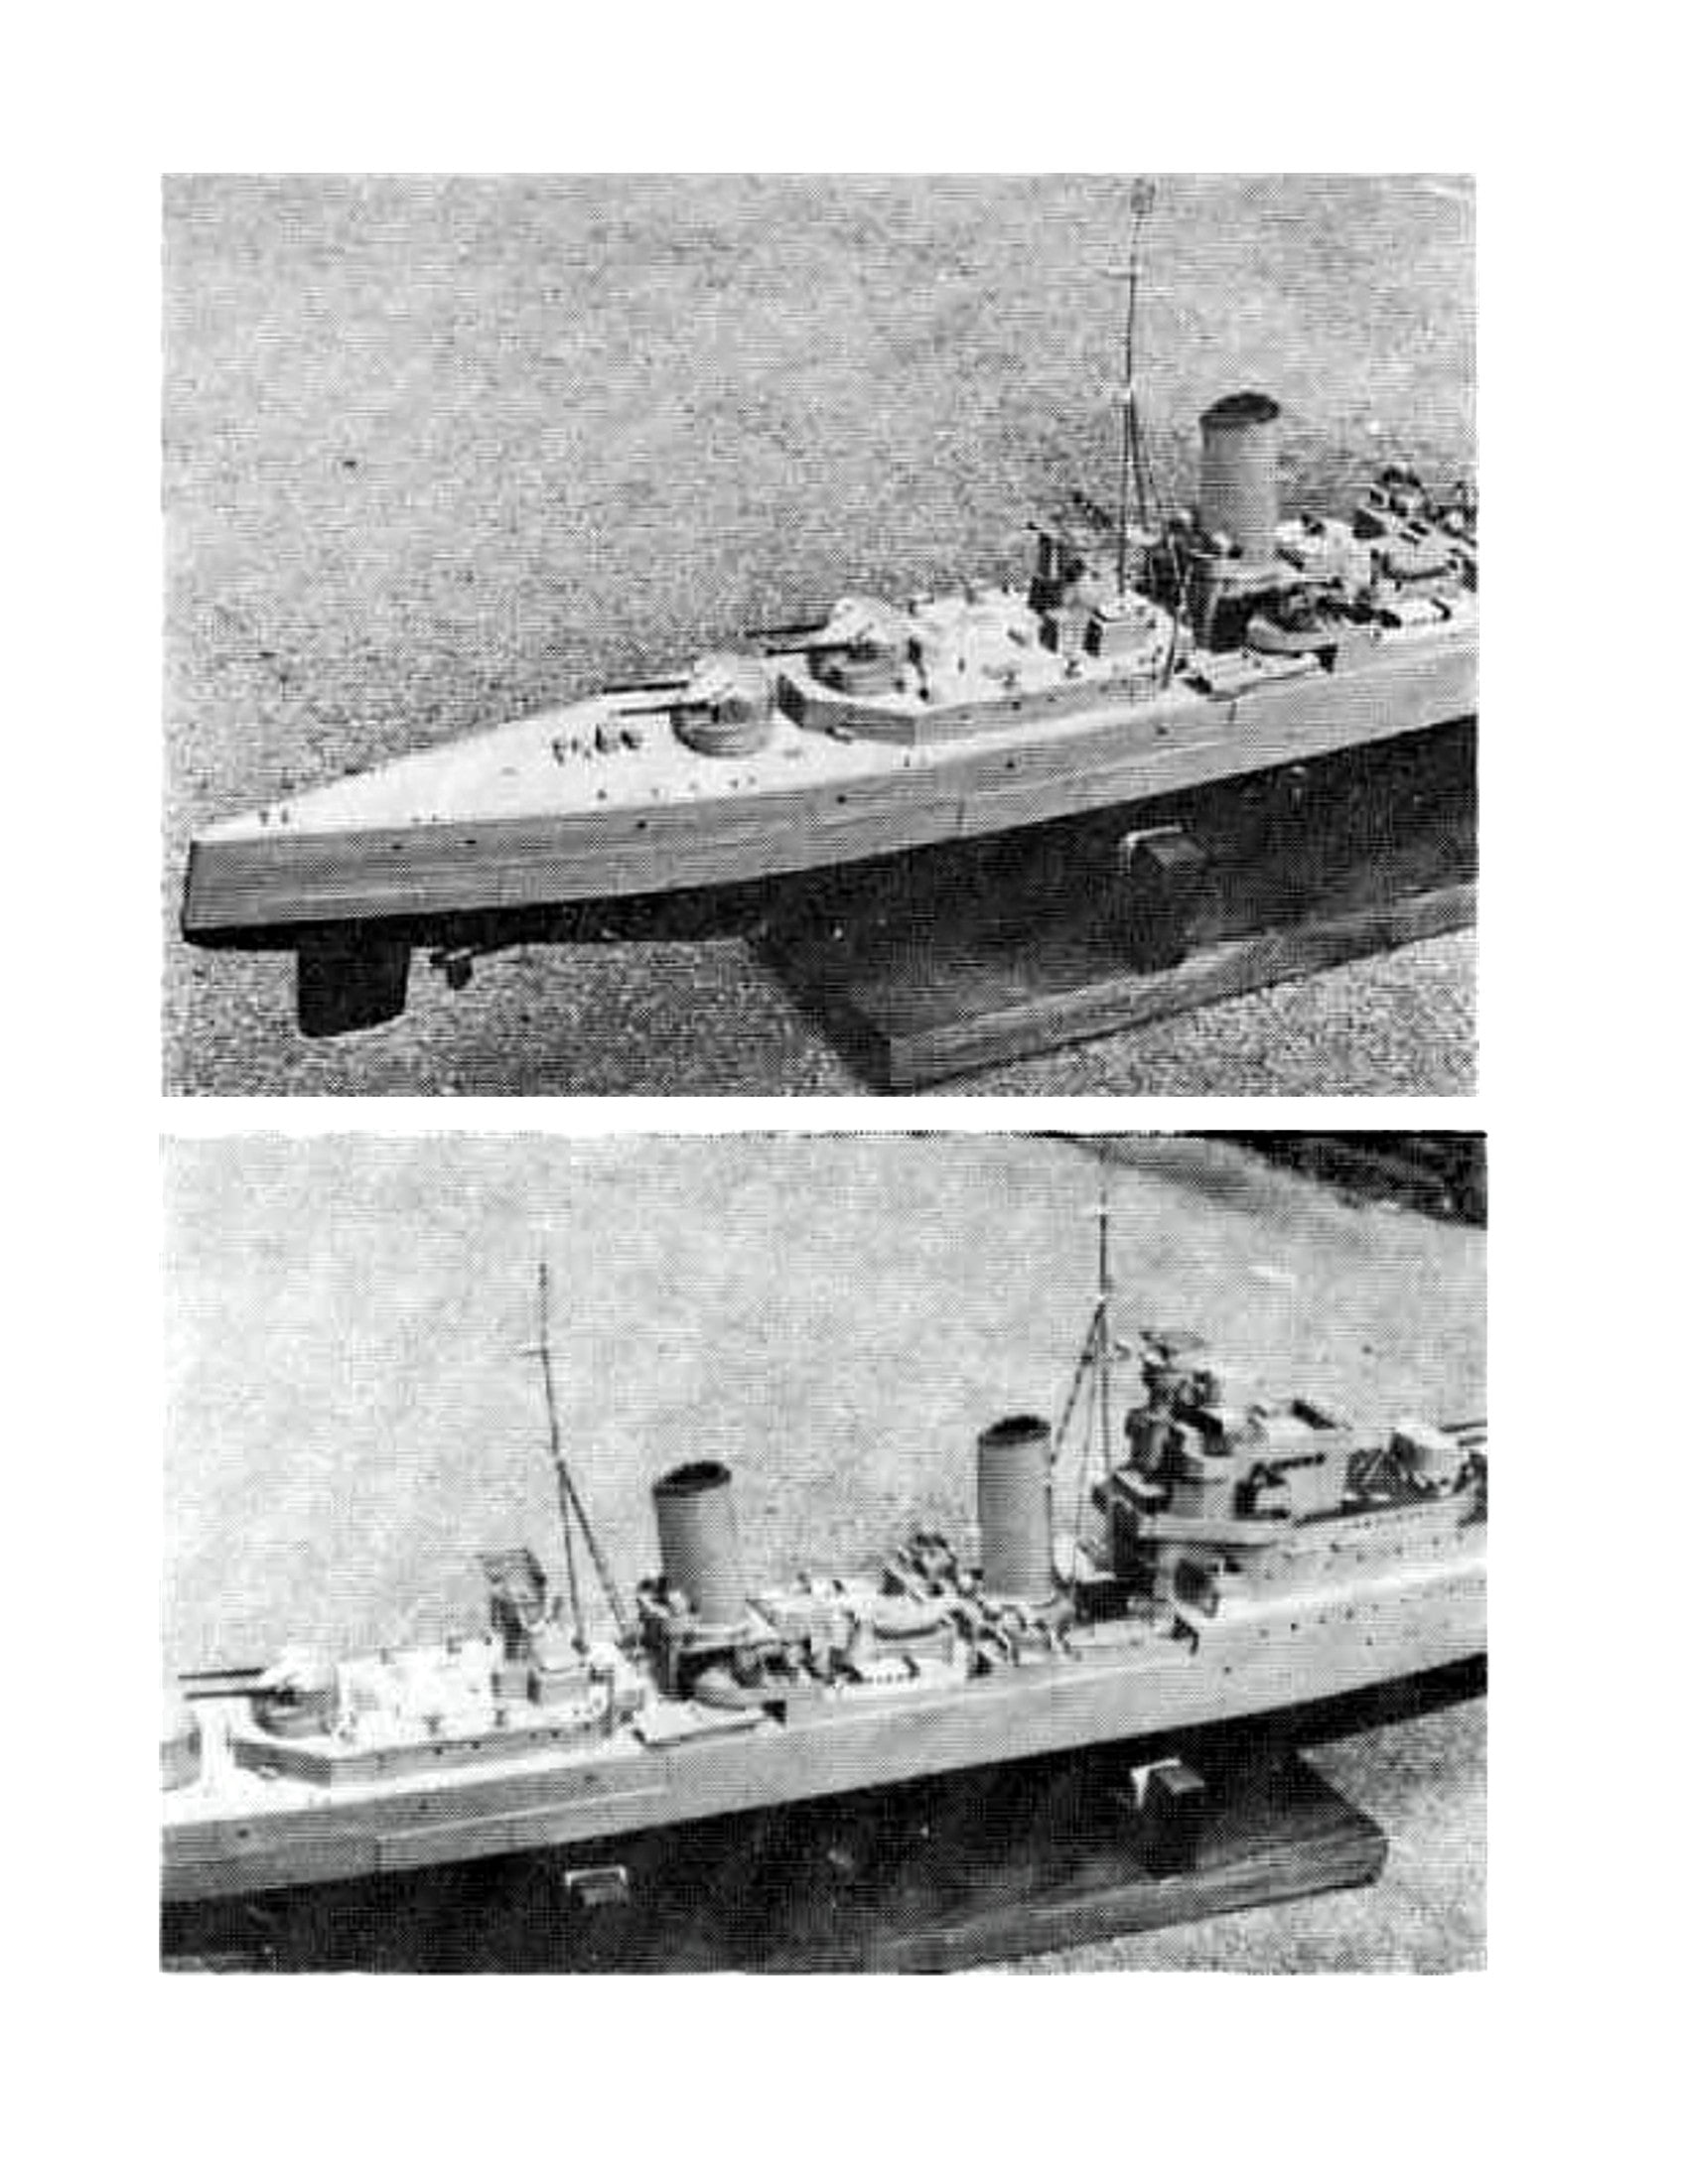 full size printed model boat plan 1:144 scale leander-class frigate boat